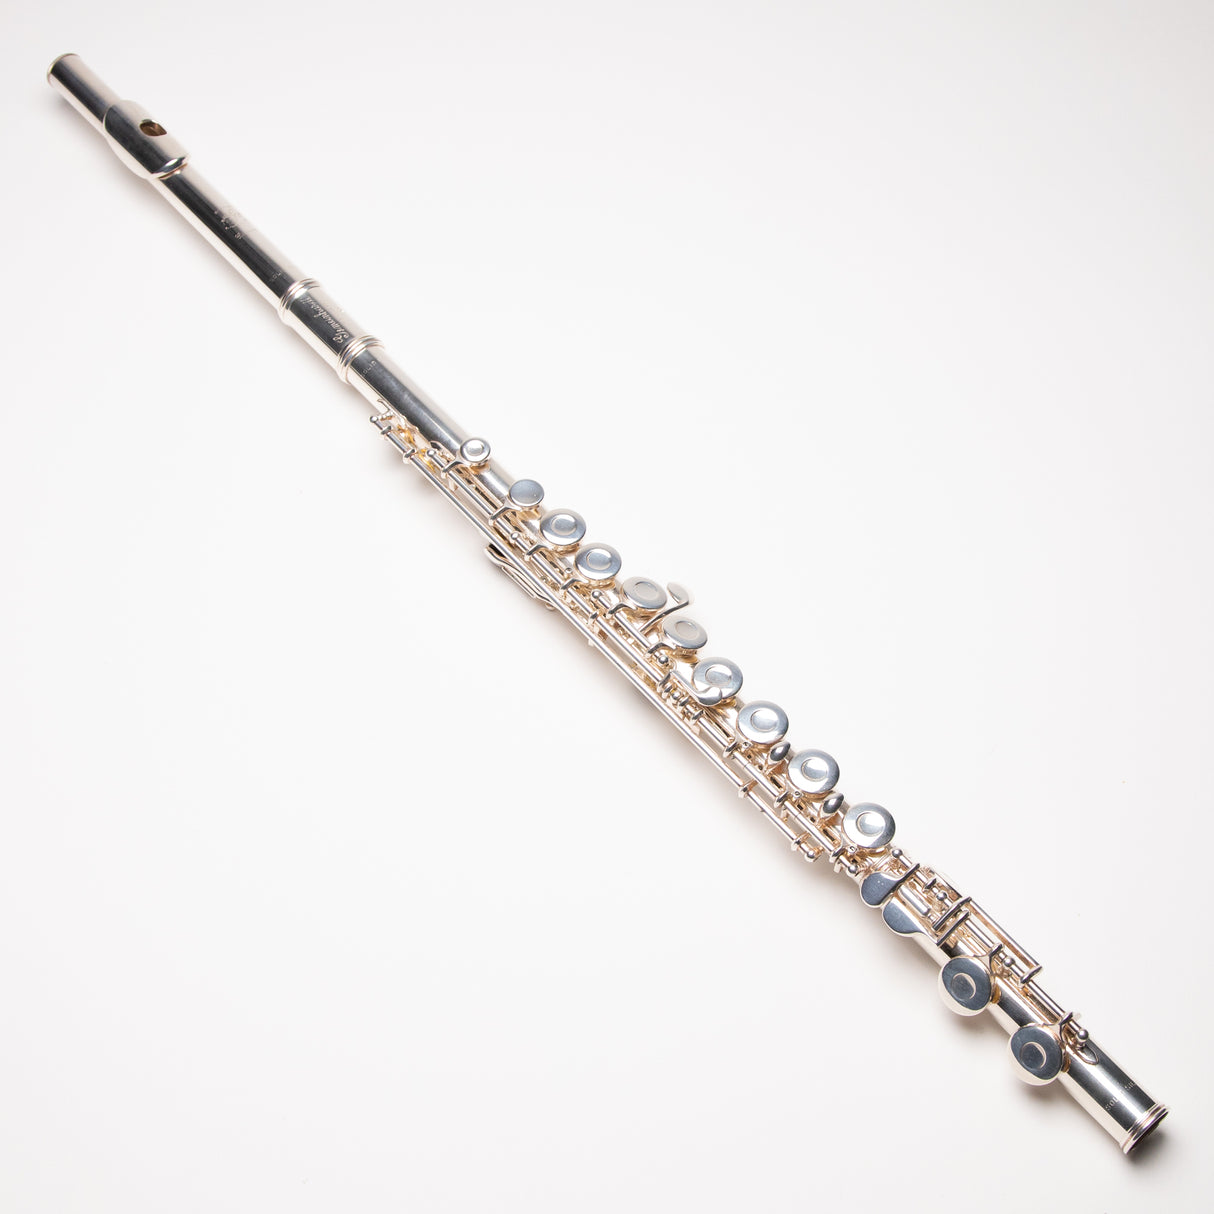 Gemeinhardt 2S Intermediate Flute